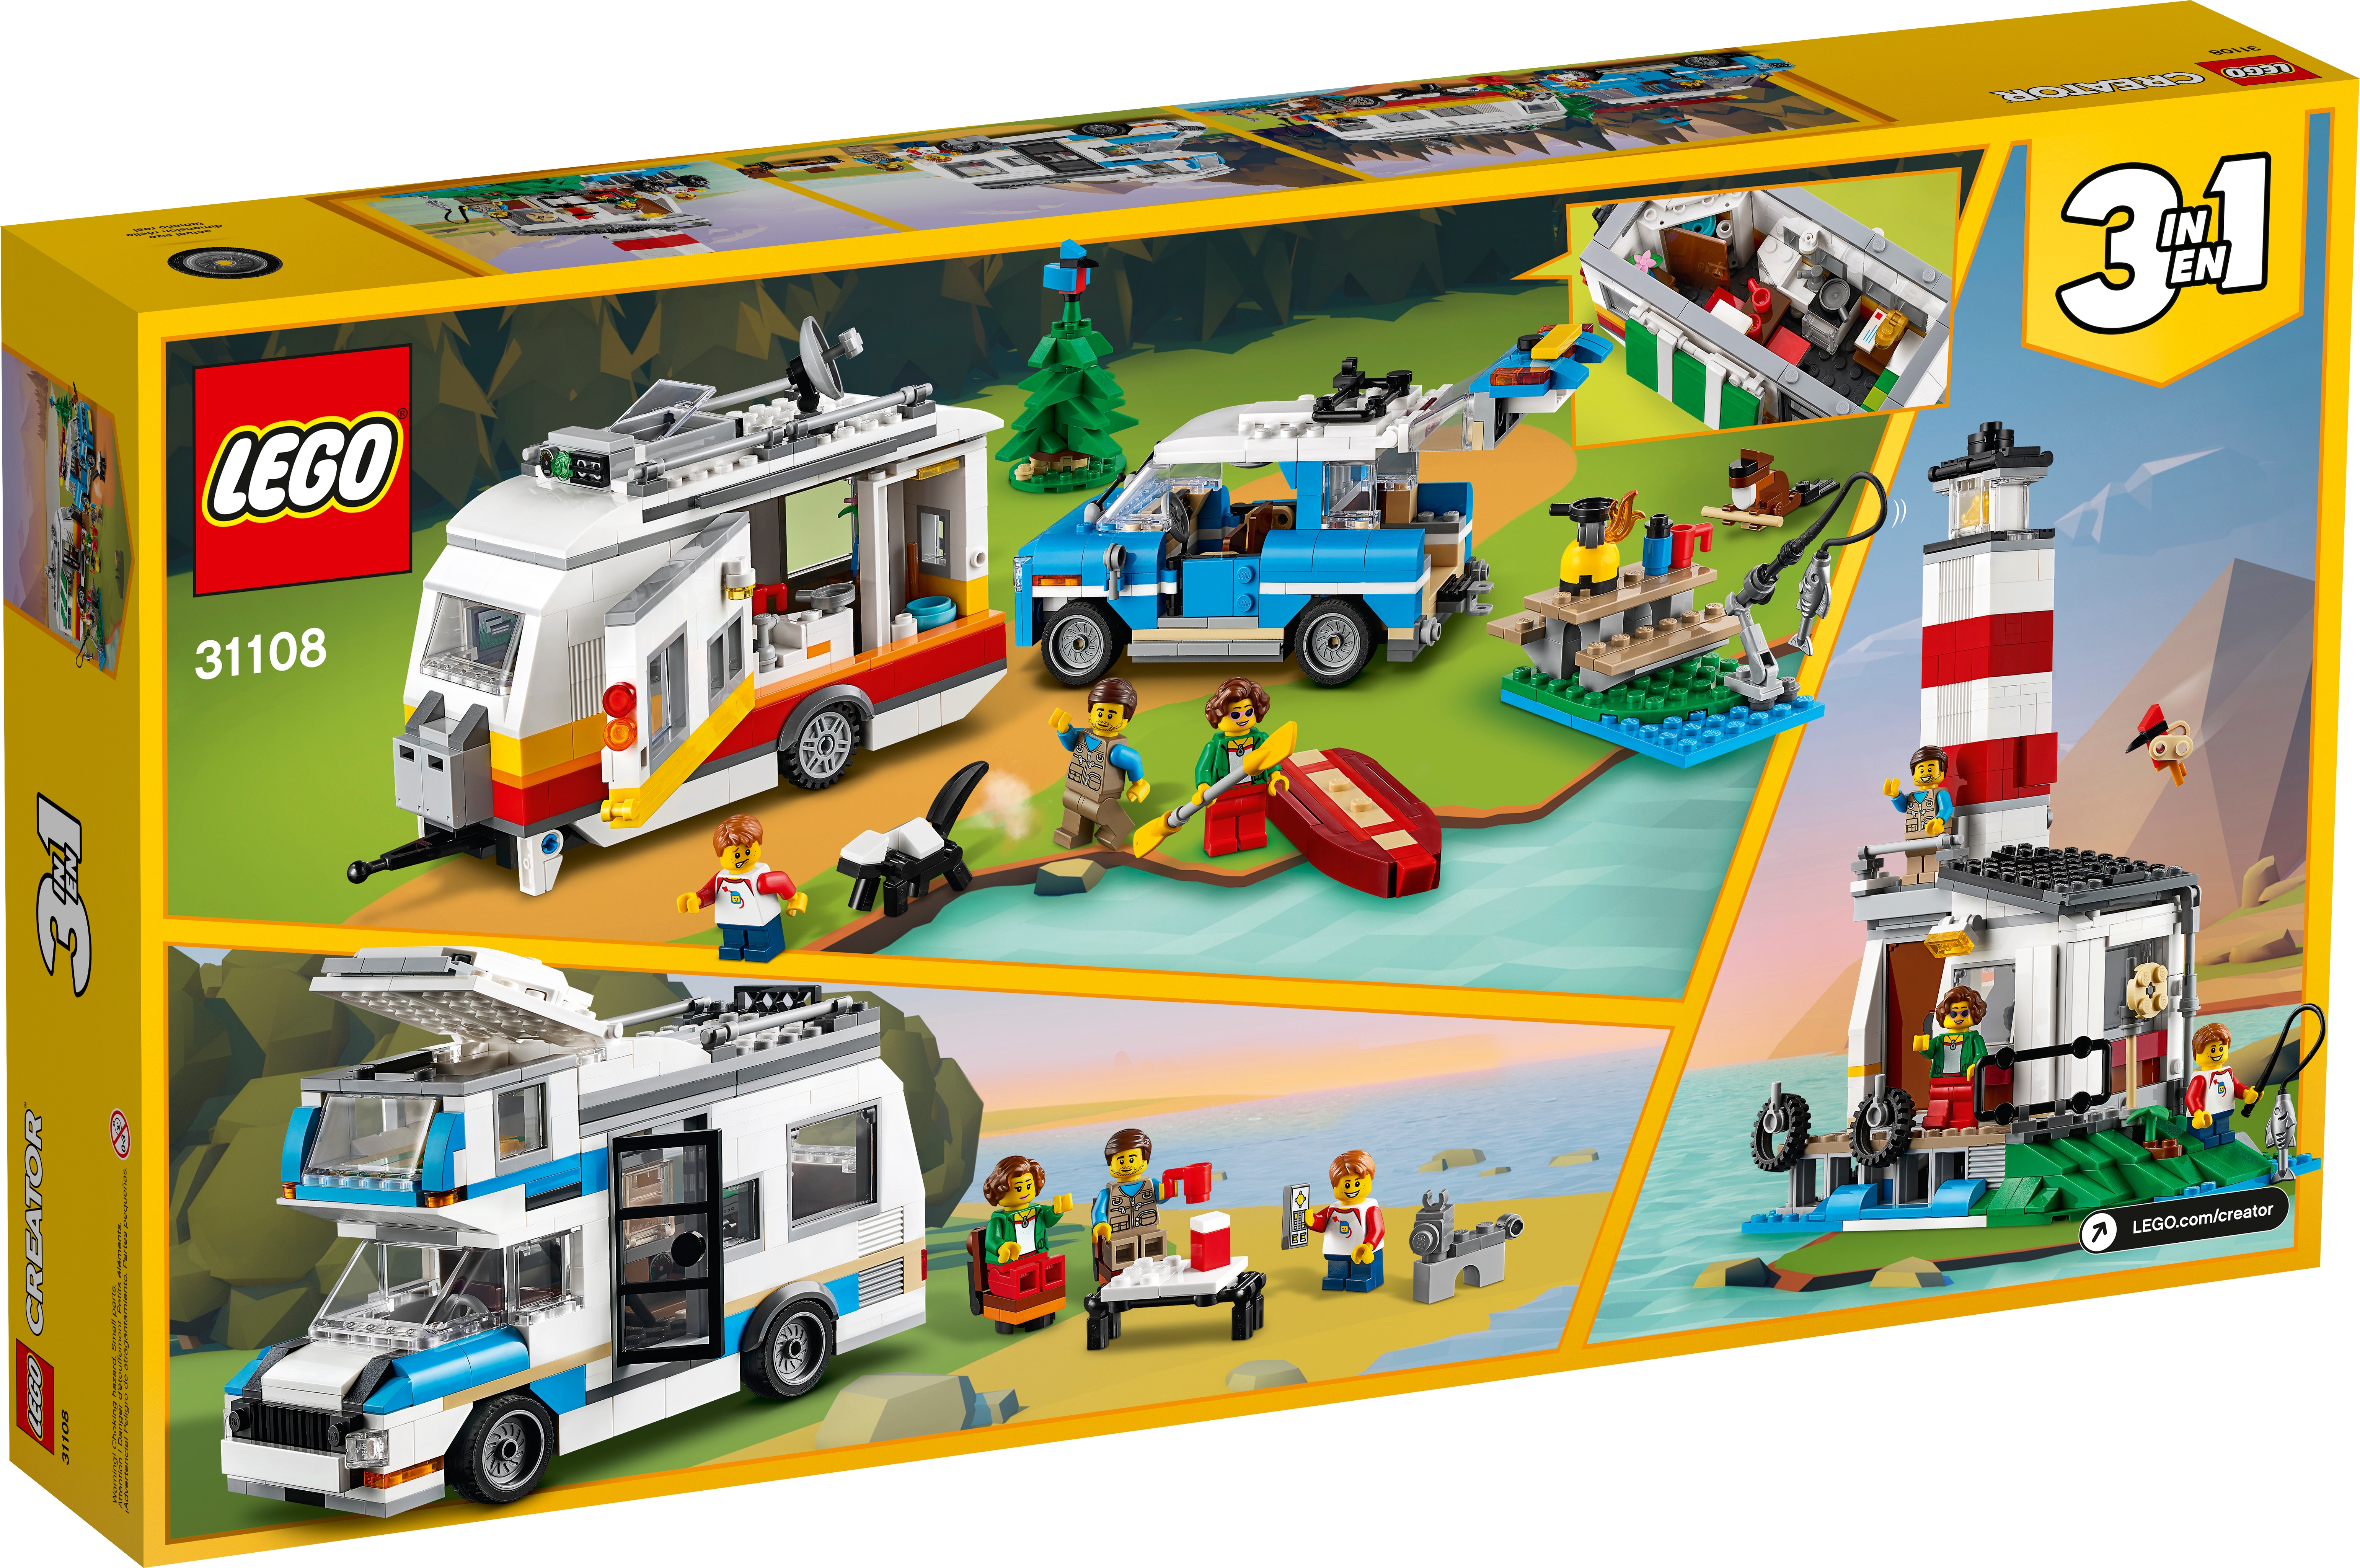 Lego 31108 Creator Caravan Family Holiday Building Set 